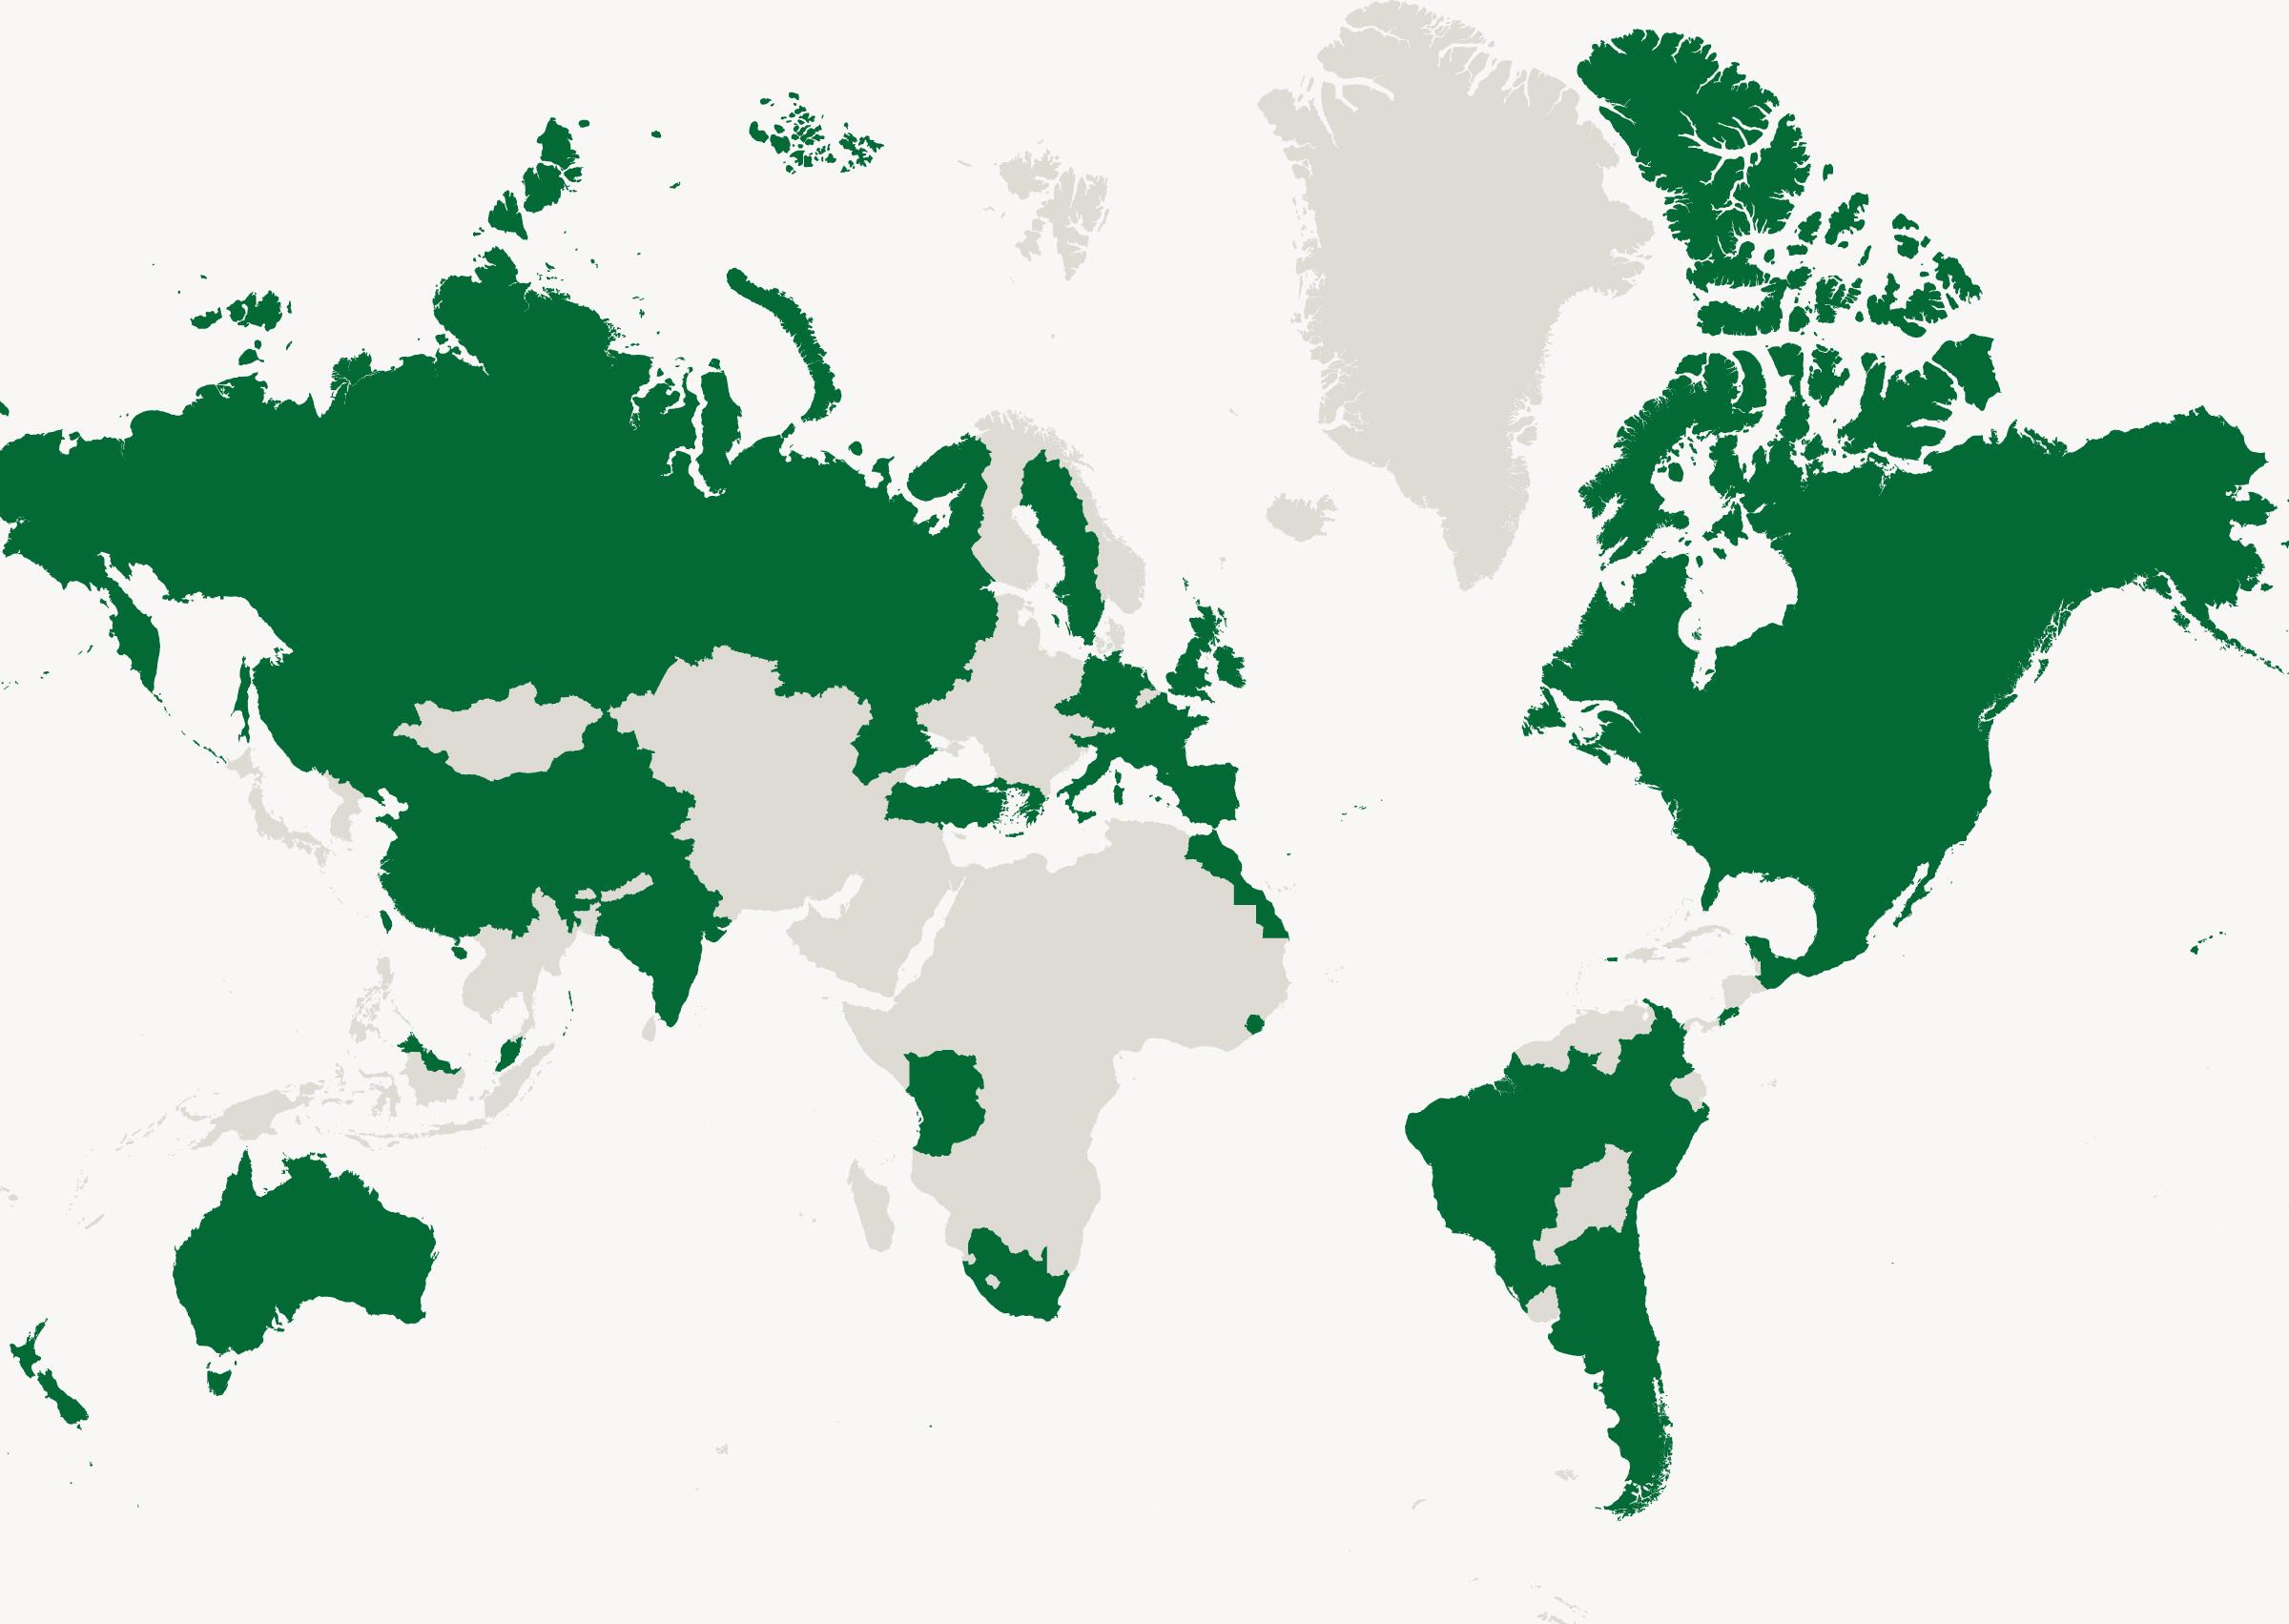 map view of 植澳门威尼斯人游戏节基金会's international community planting partners